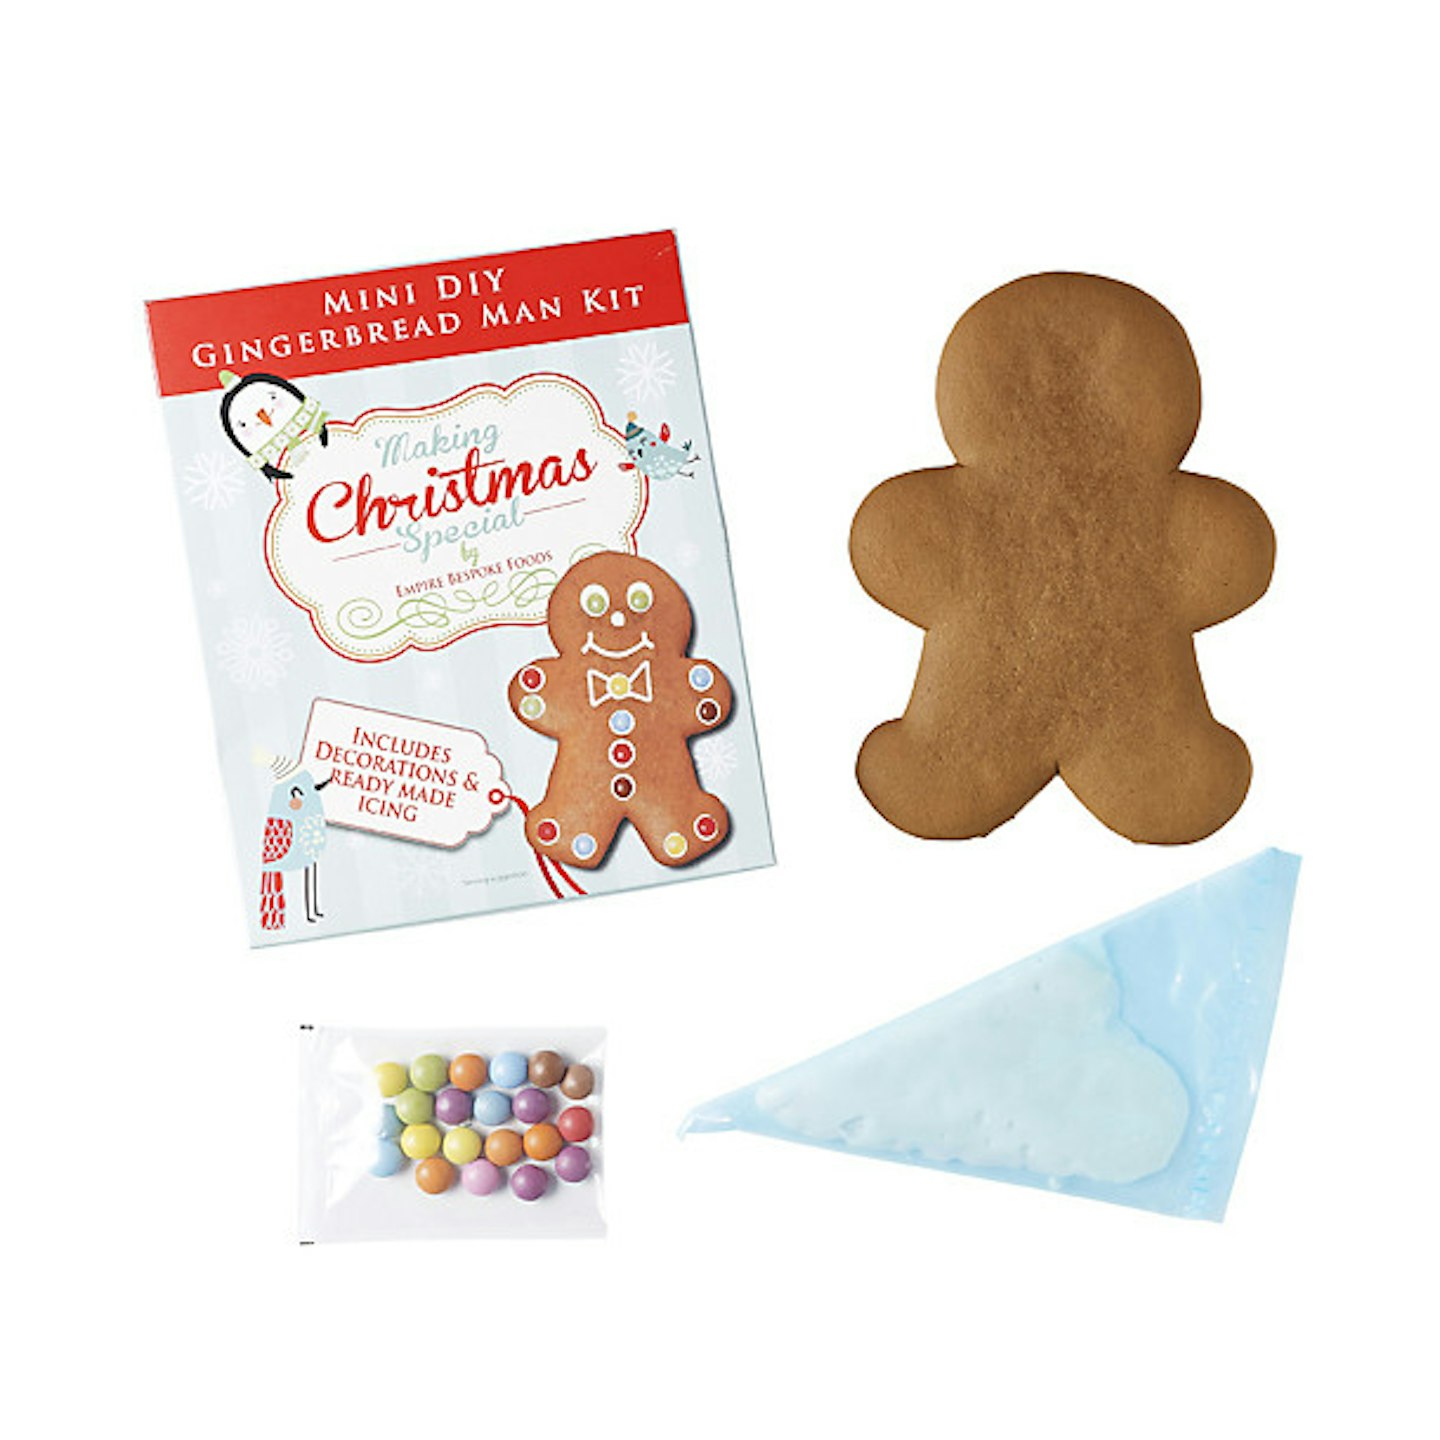 The best cookie decorating kits: Lakeland Gingerbread Man Kit